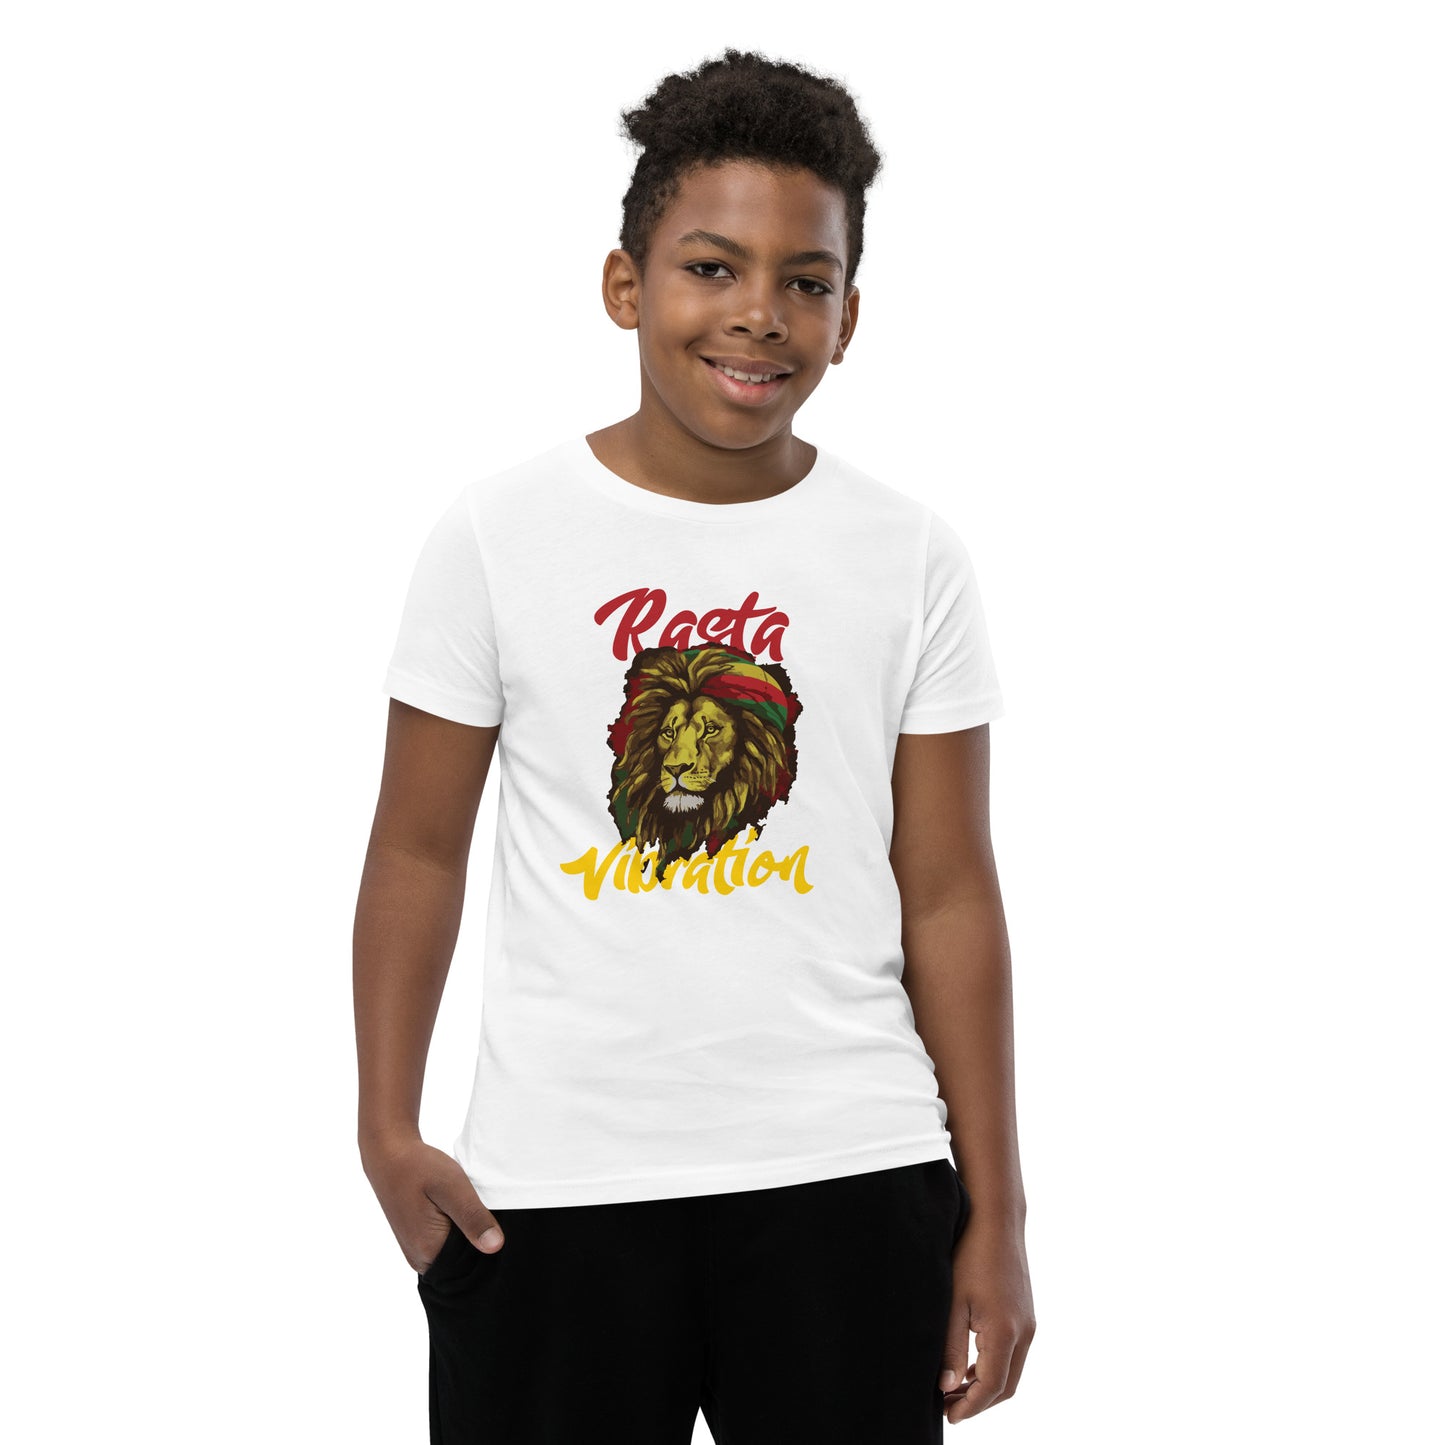 Youth Short Sleeve "Rasta Vibration" T-Shirt